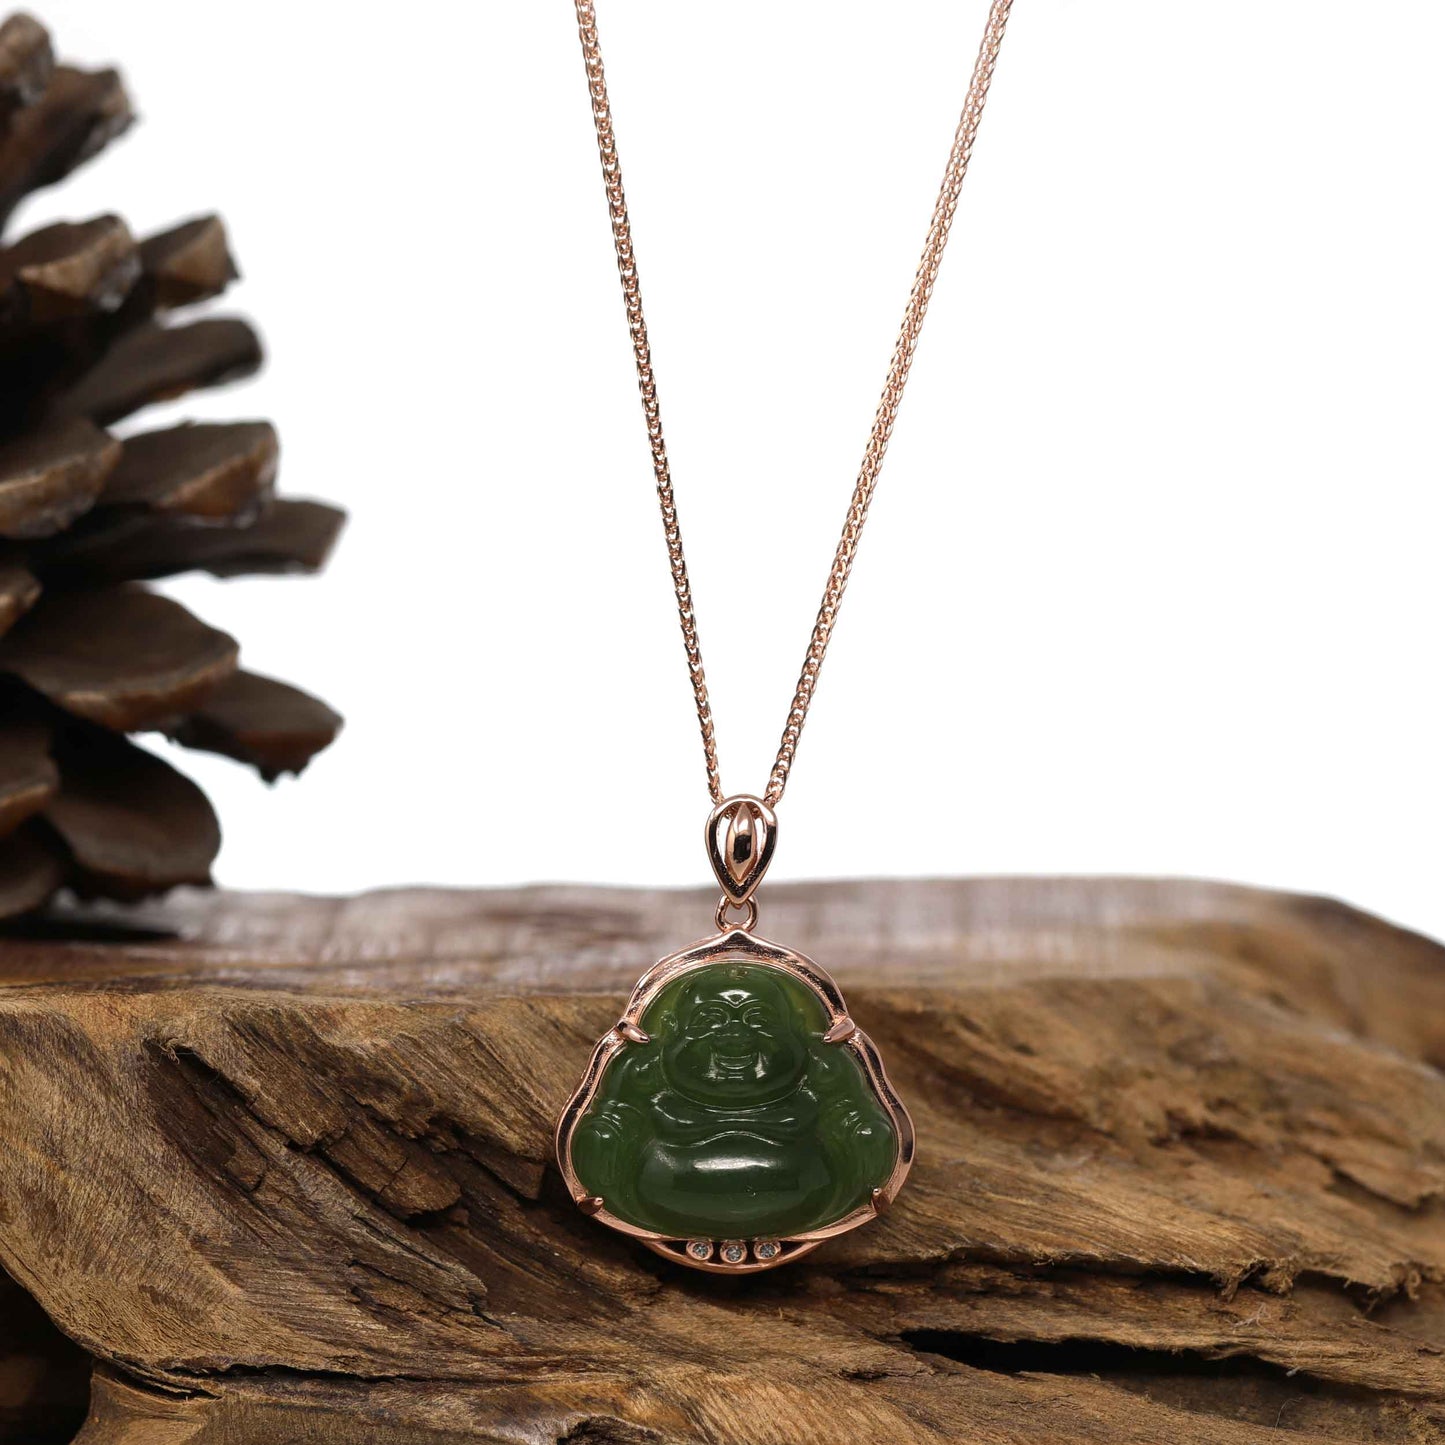 RealJade® "Laughing Buddha" Genuine Nephrite Green Jade Buddha Pendant Necklace